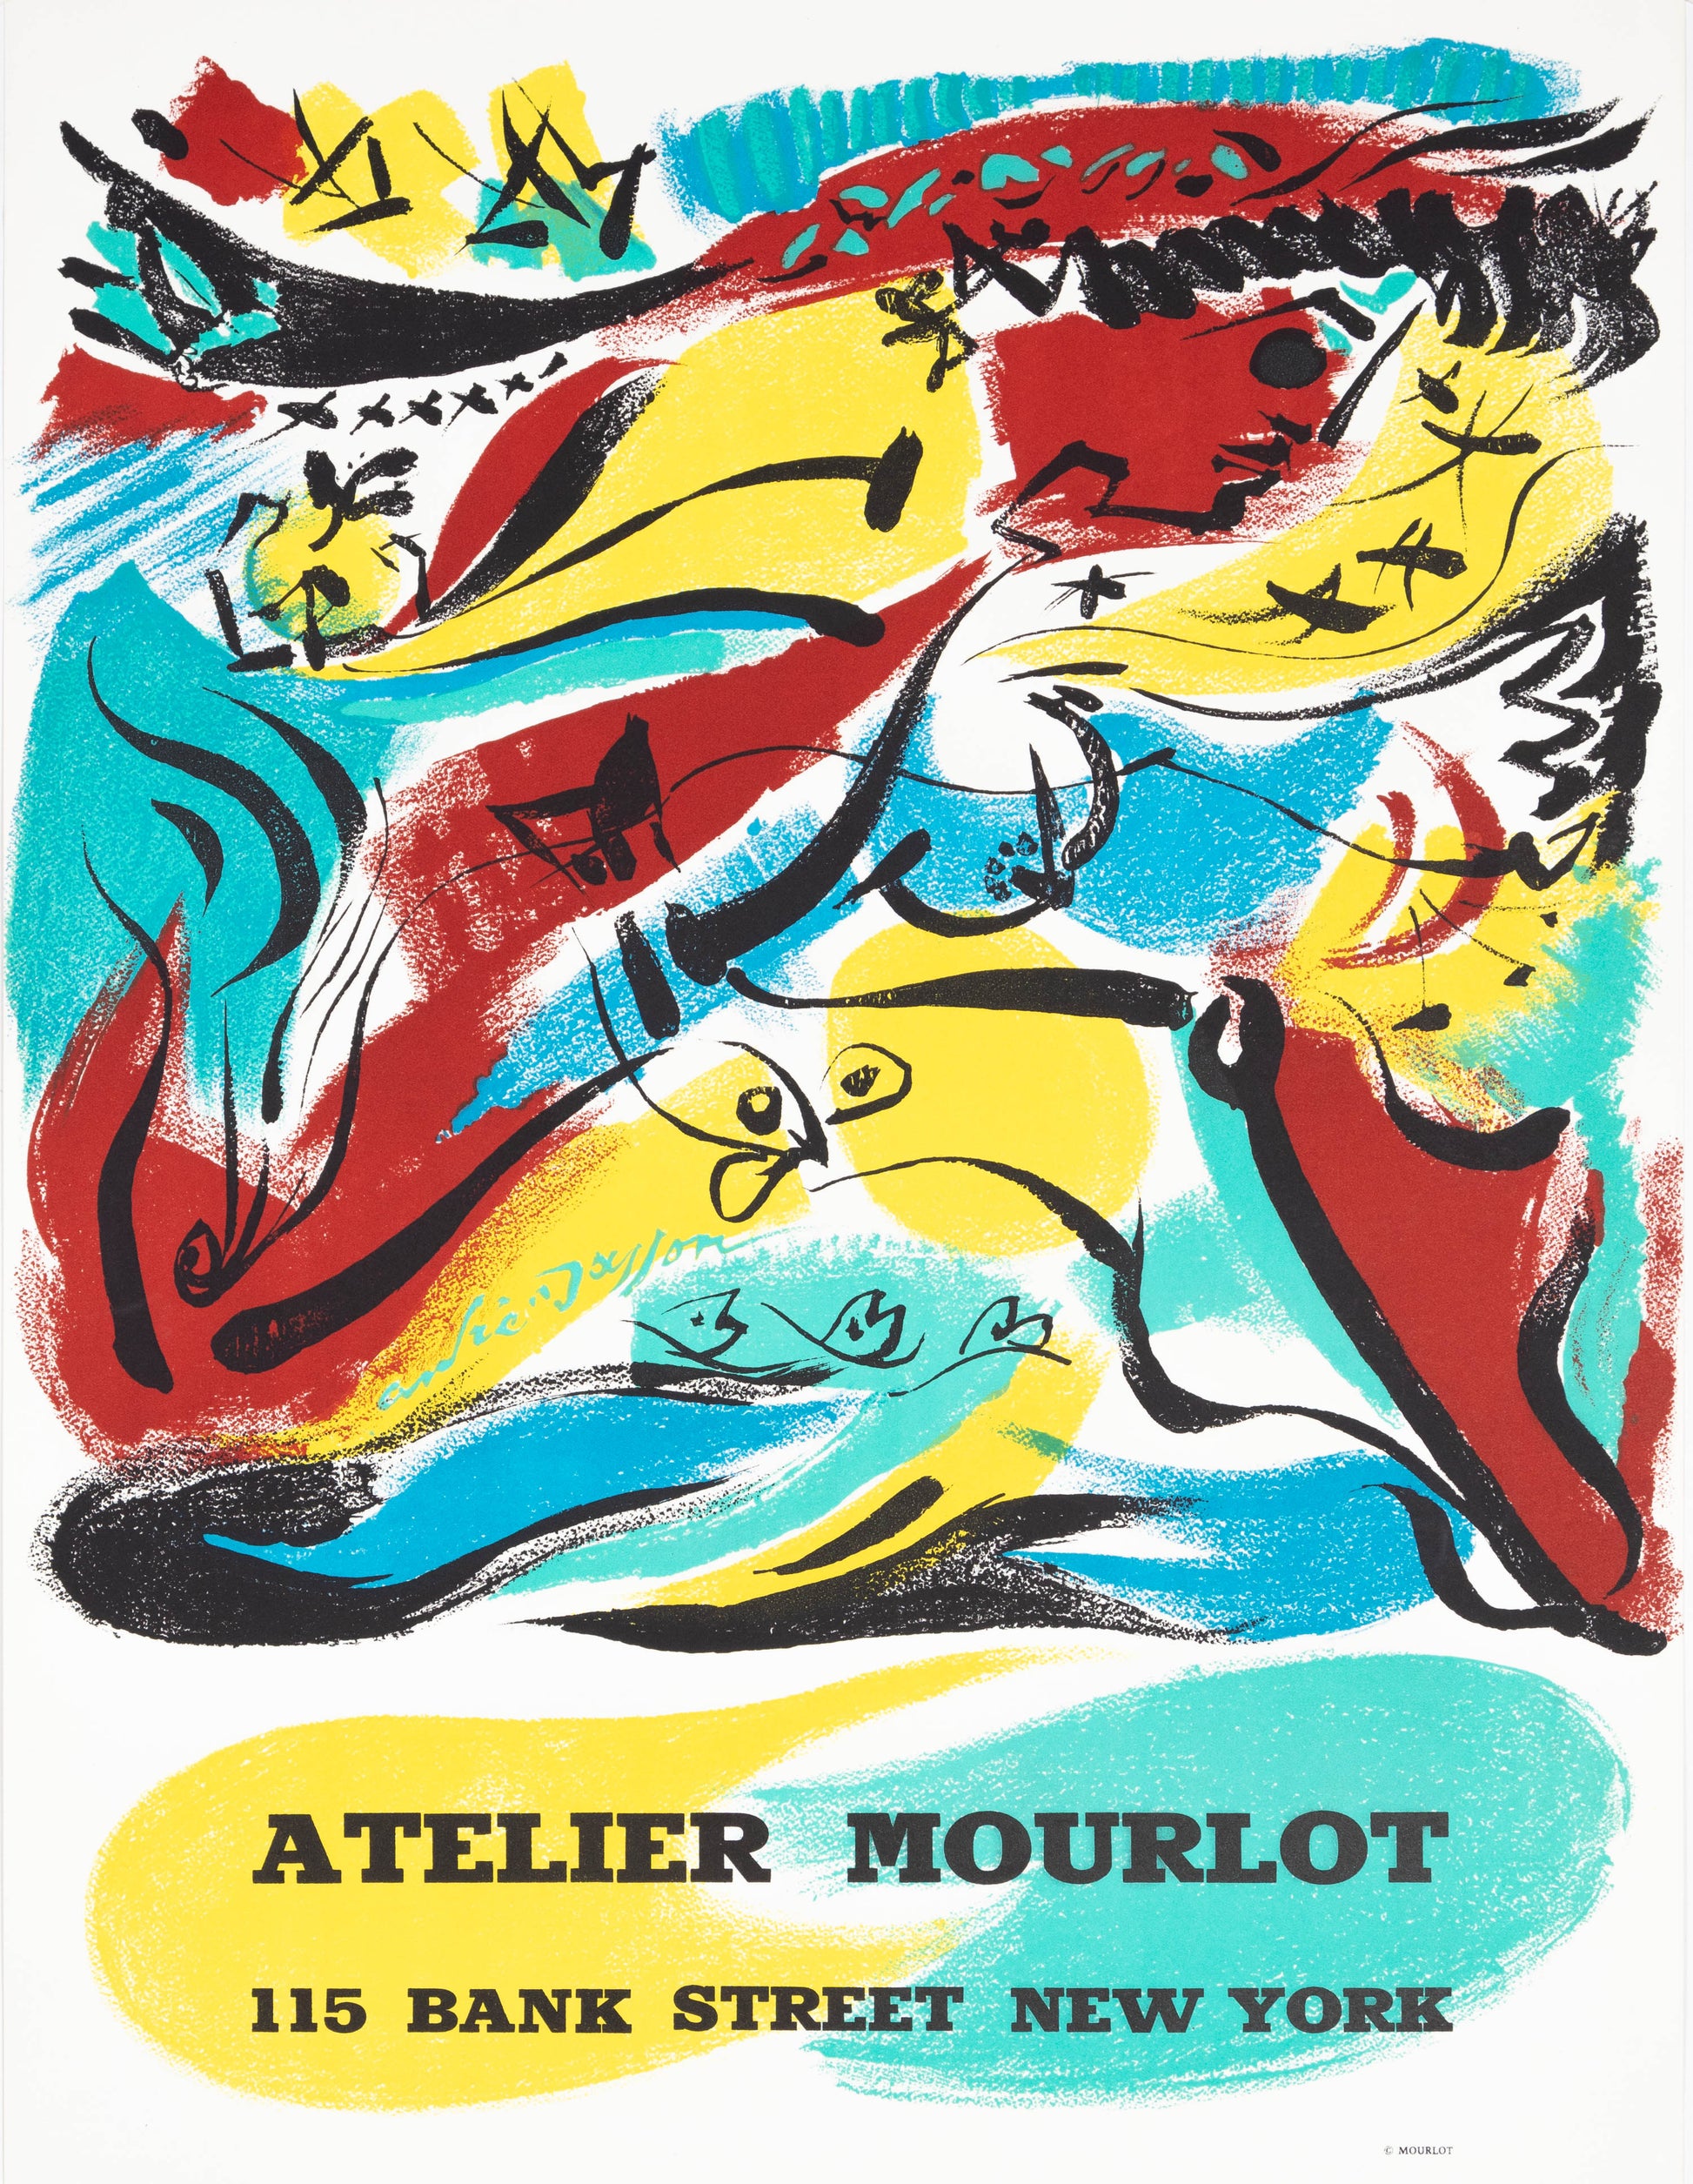 Atelier Mourlot - New York by Andre Masson, 1967 - Mourlot Editions - Fine_Art - Poster - Lithograph - Wall Art - Vintage - Prints - Original